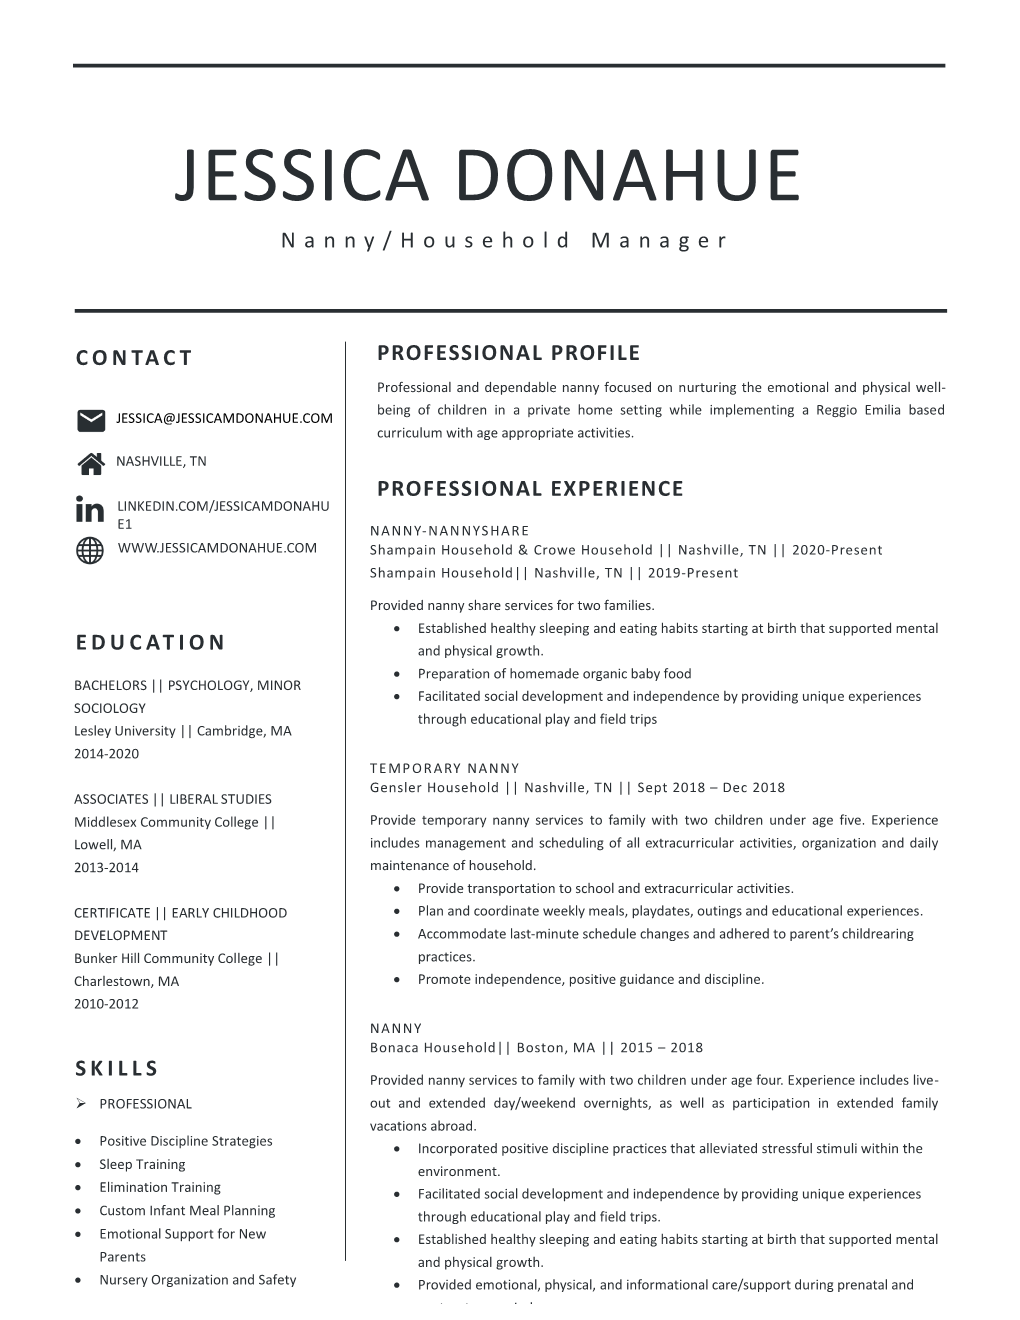 JESSICA DONAHUE Nanny/Household Manager